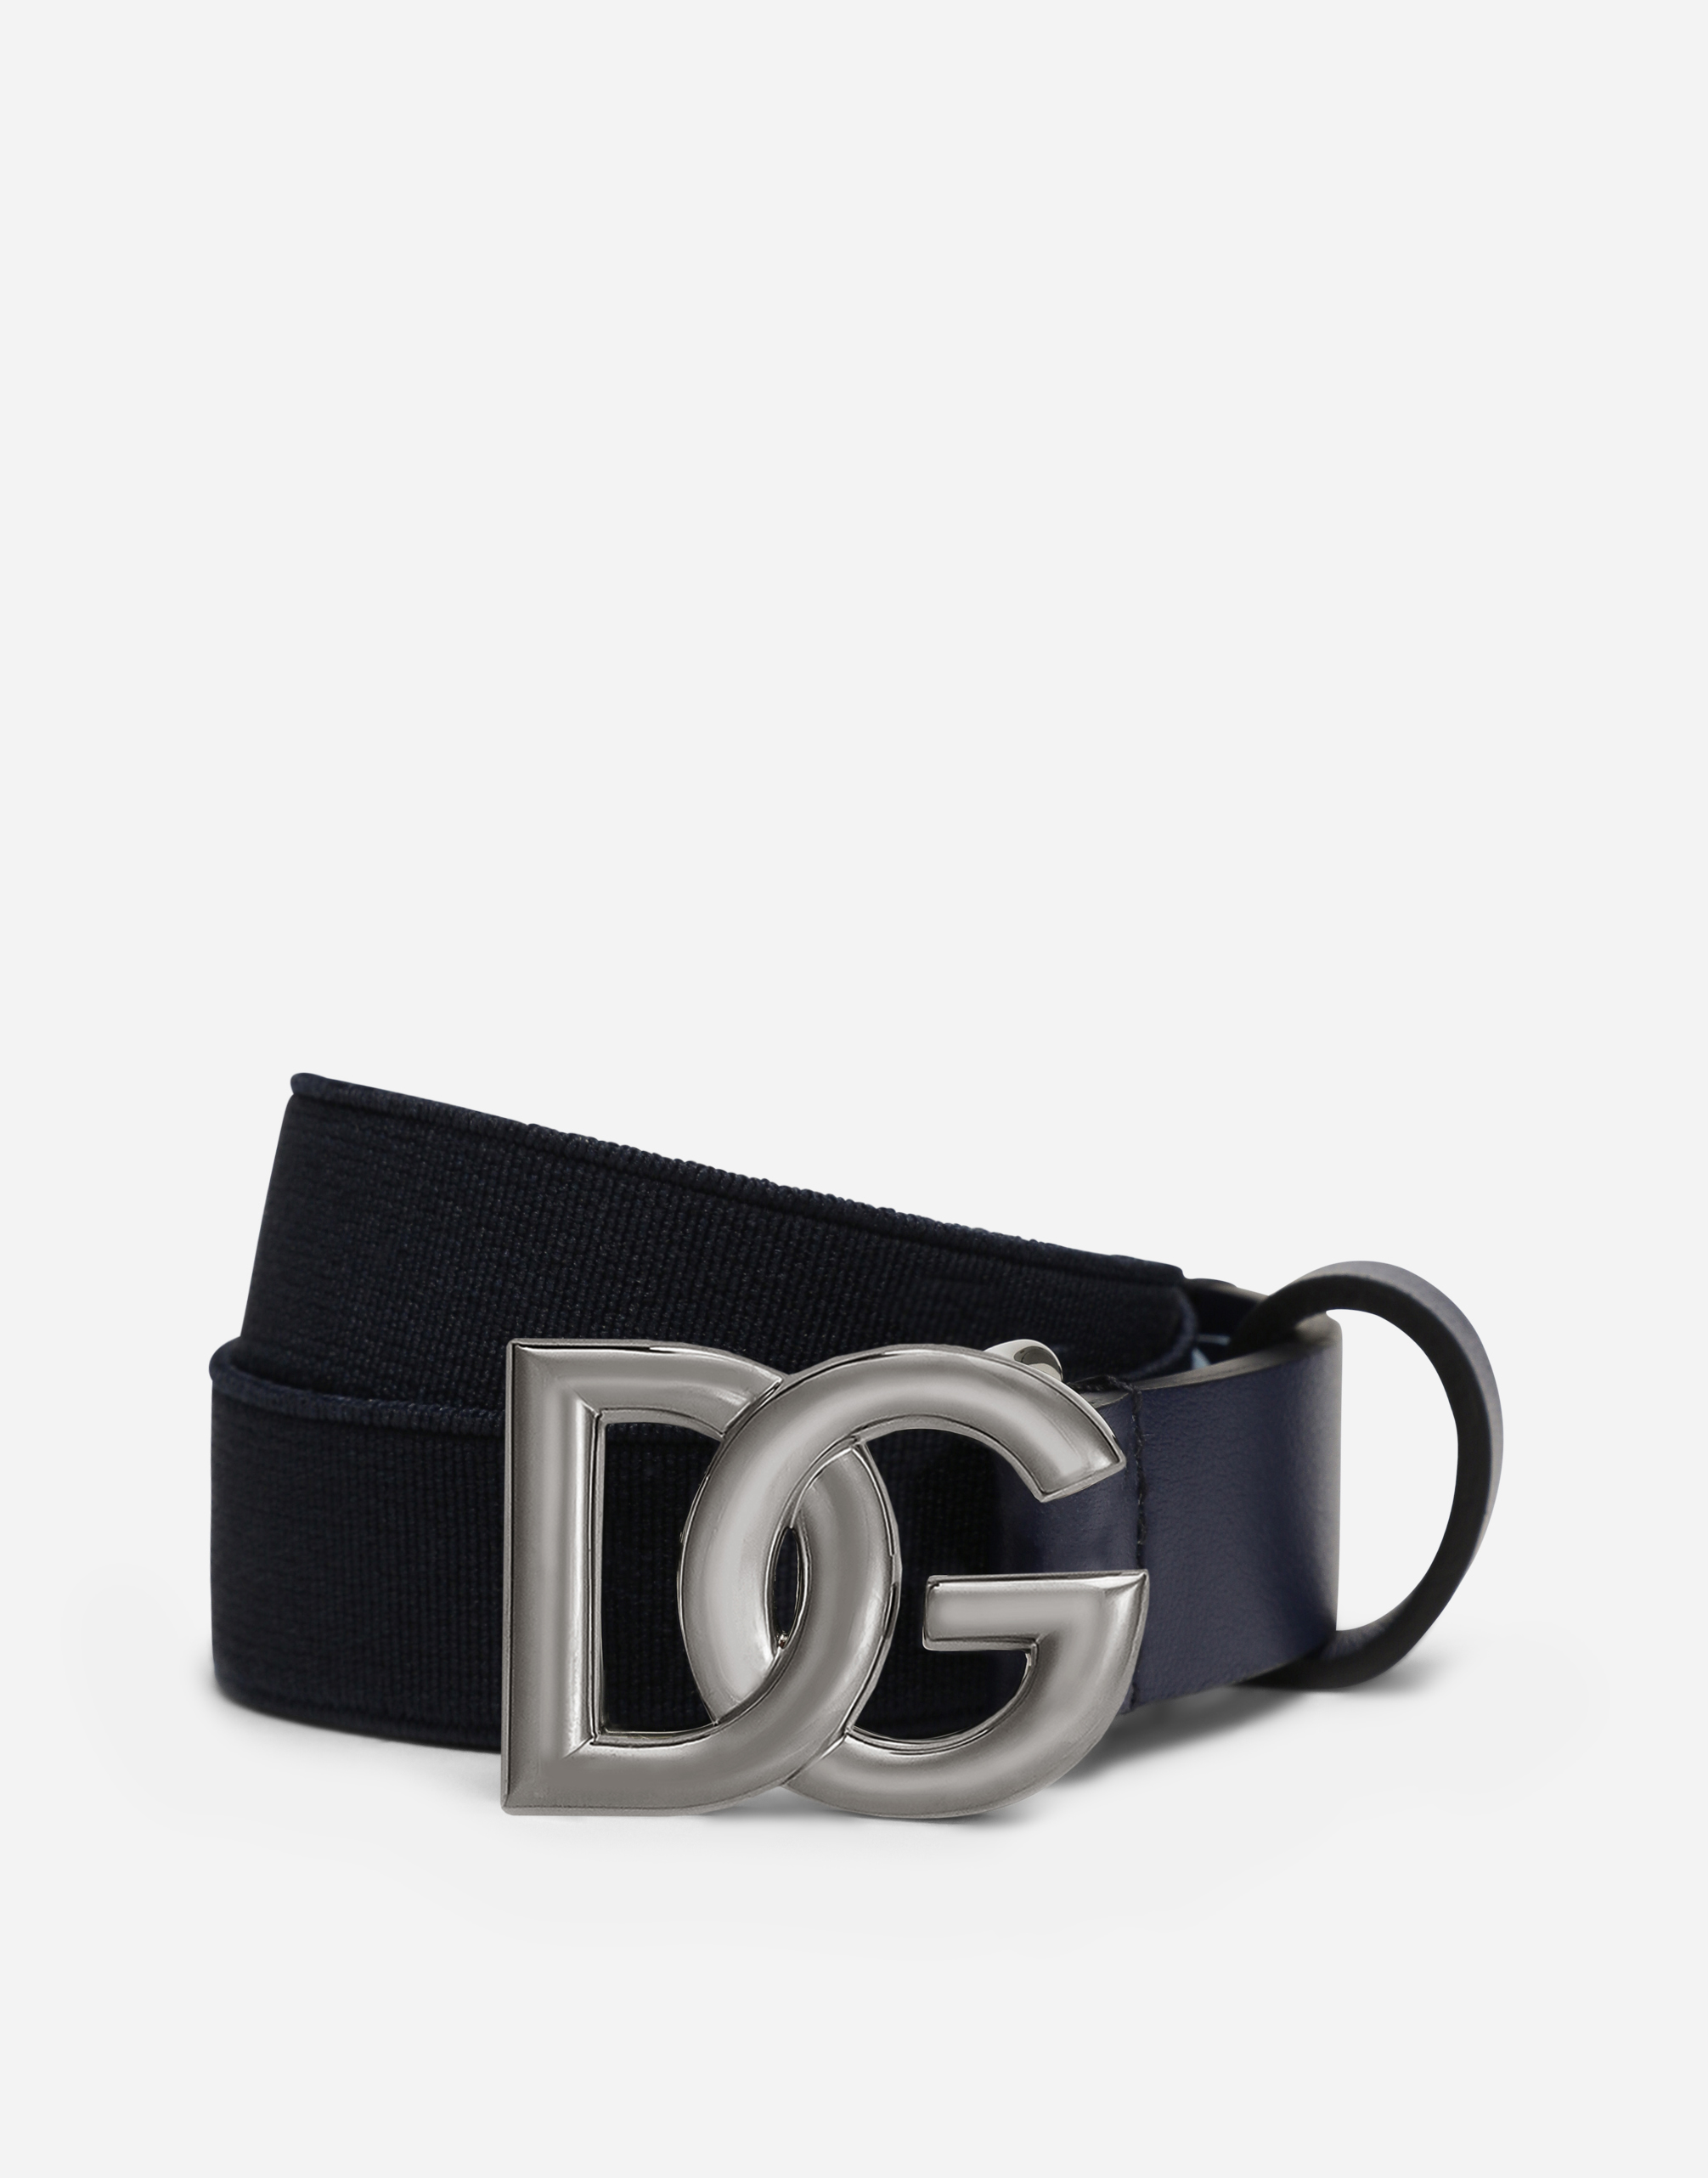 Stretch belt with DG logo in Blue